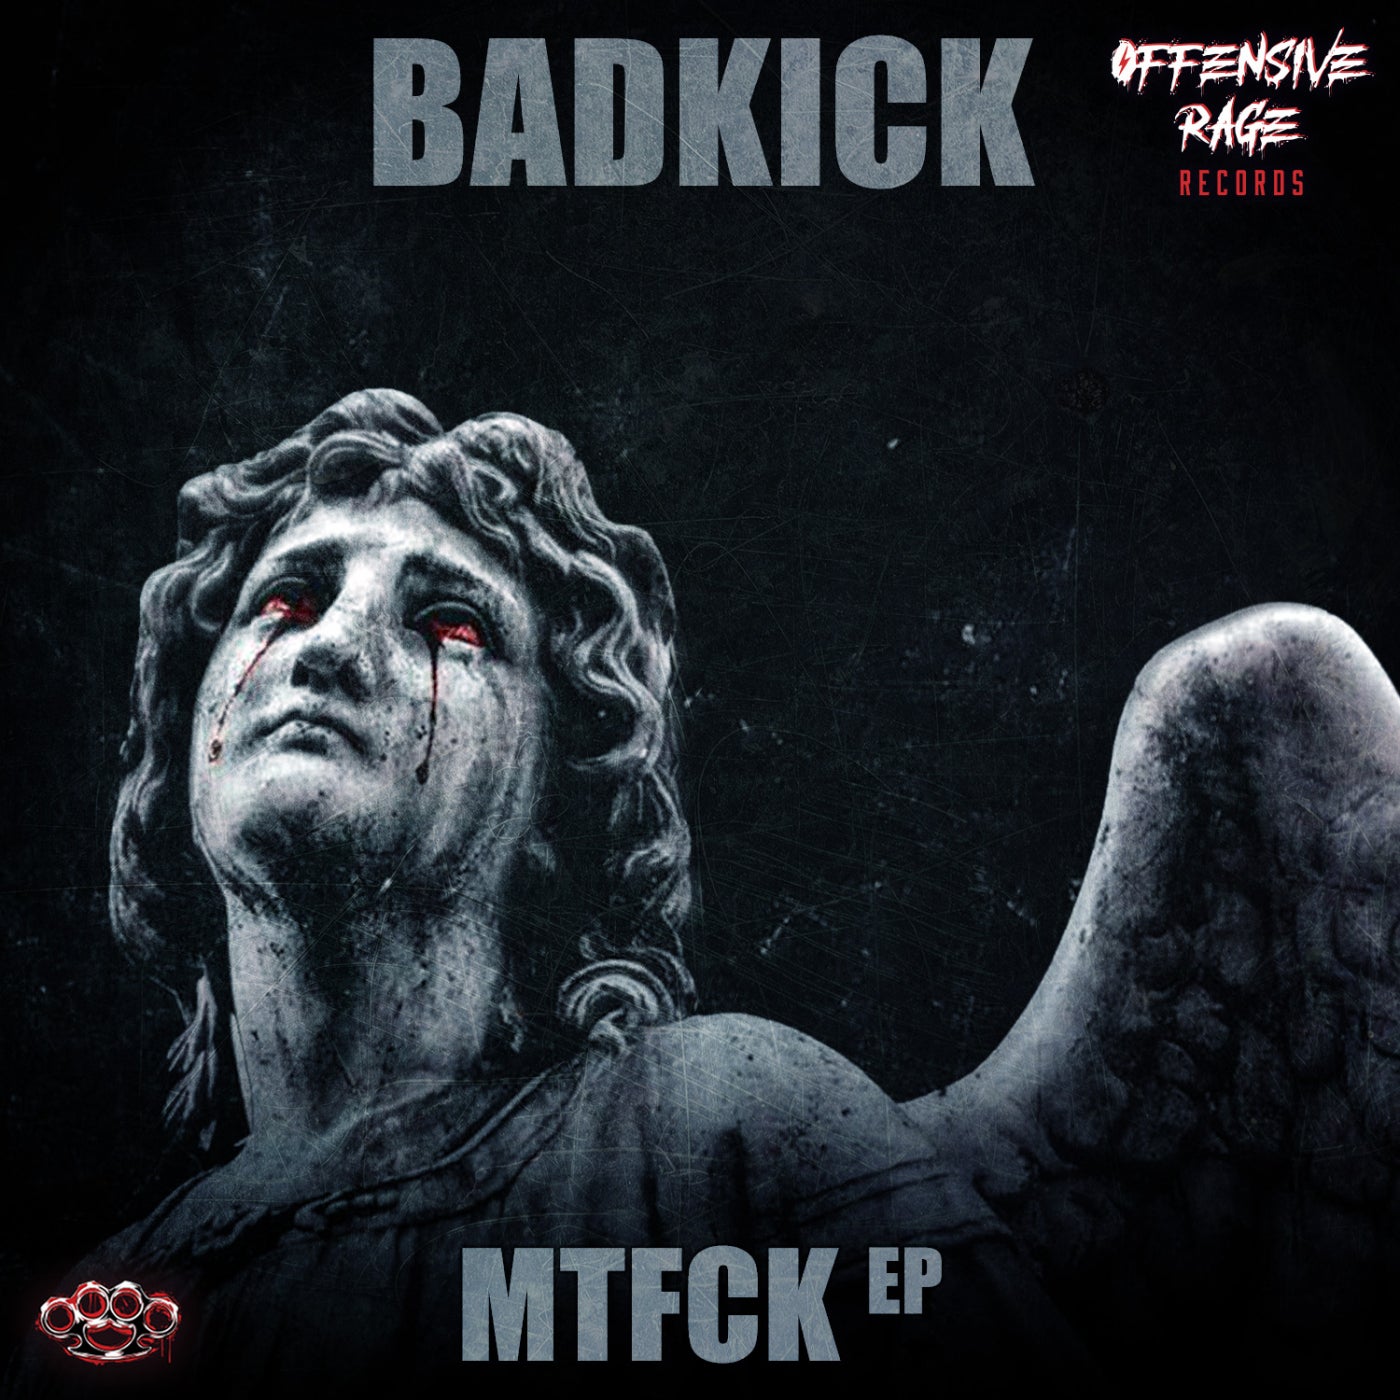 MTFCK (Original Mix) by Badkick on Beatport